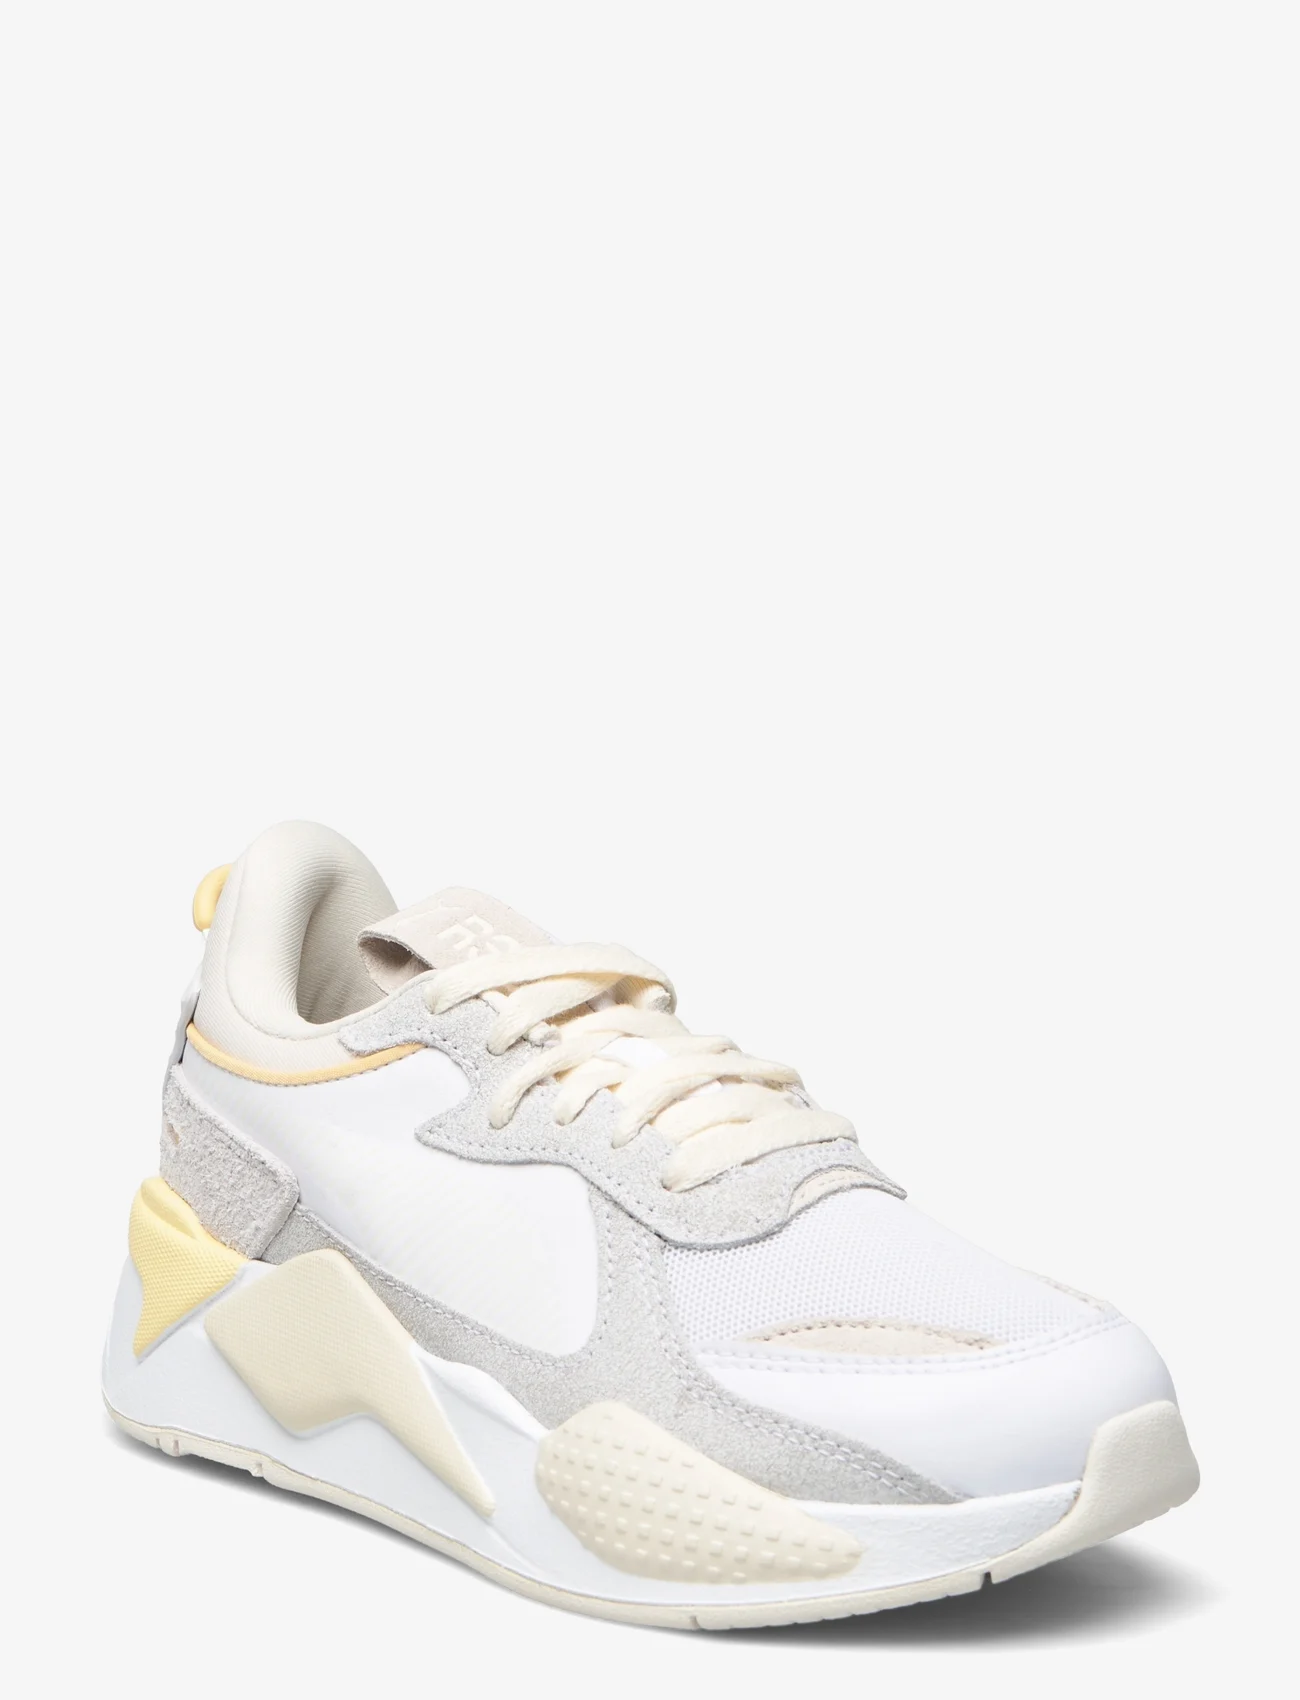 PUMA - RS-X Thrifted Wns - låga sneakers - puma white-pristine-feather gray - 0